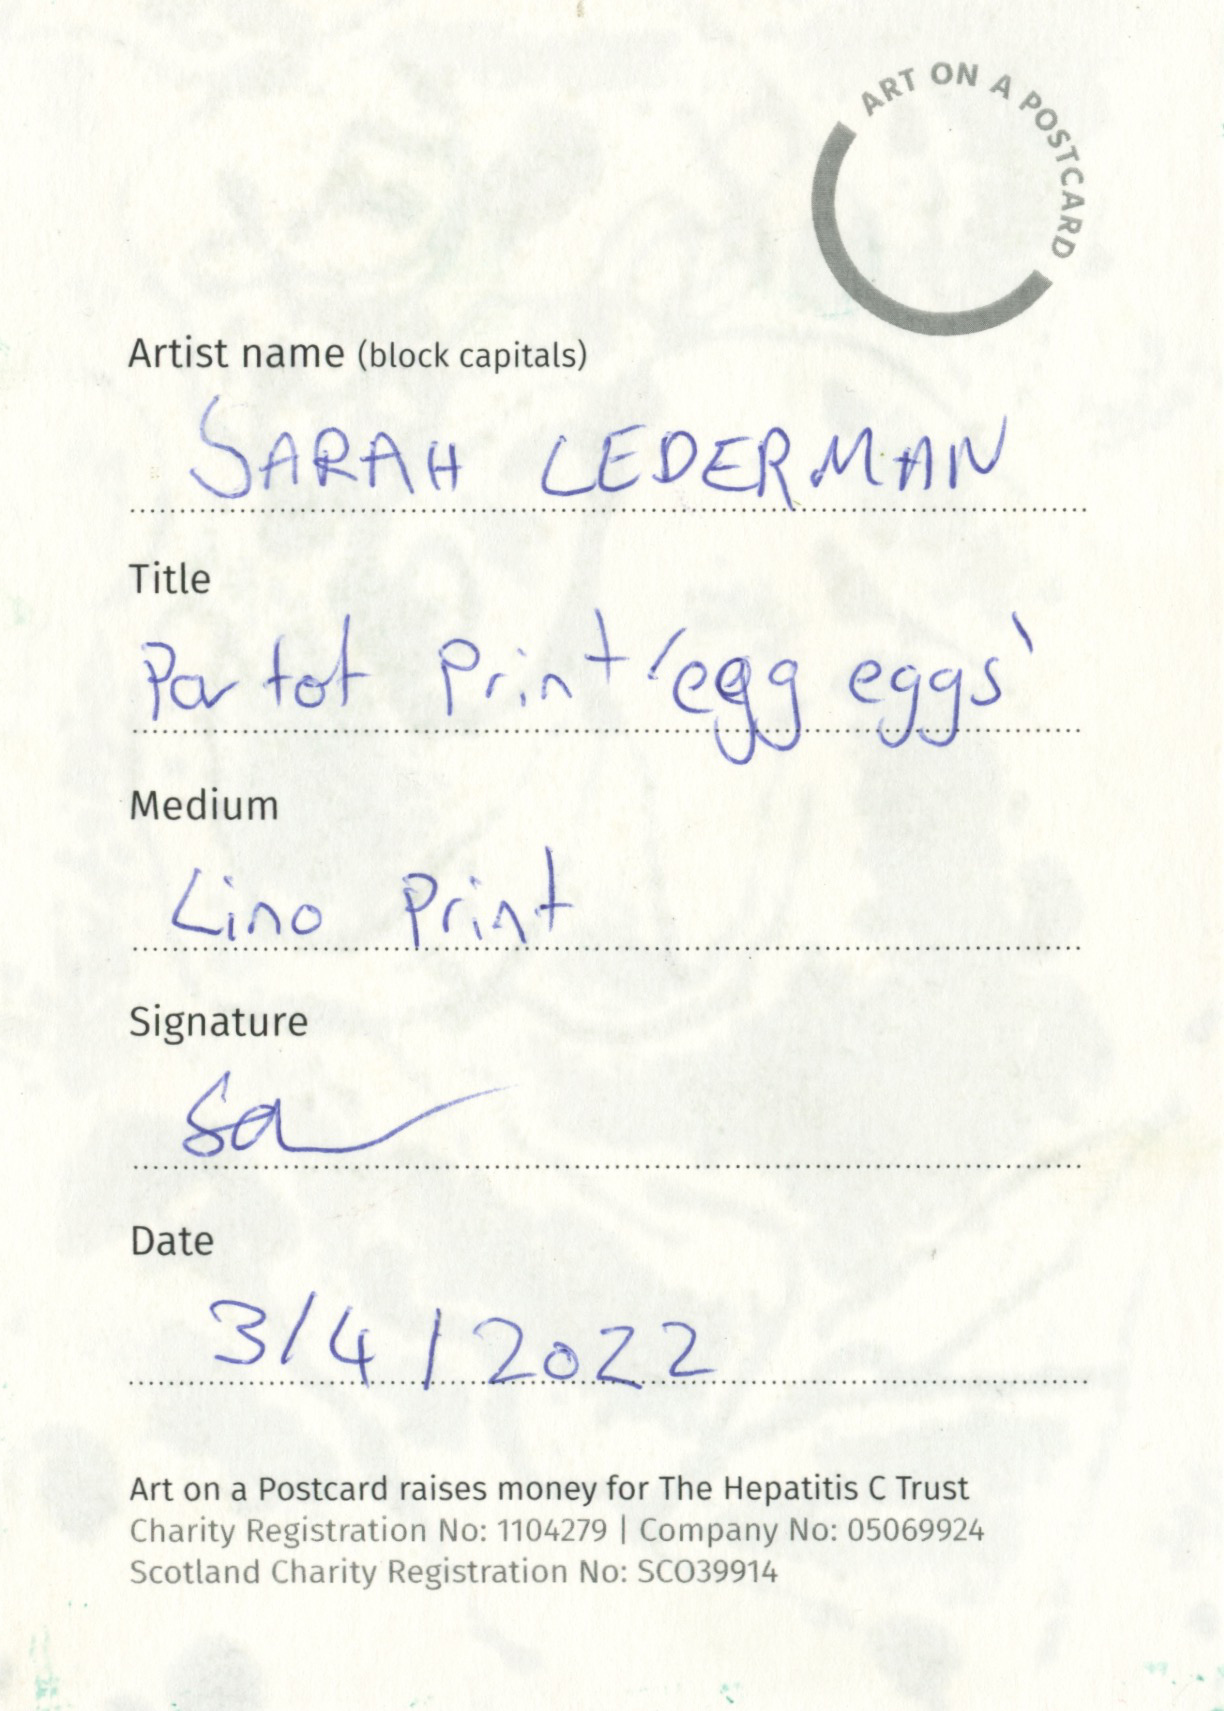 16. Sarah Lederman - Part of Print 'eggs eggs' (1) - BACK